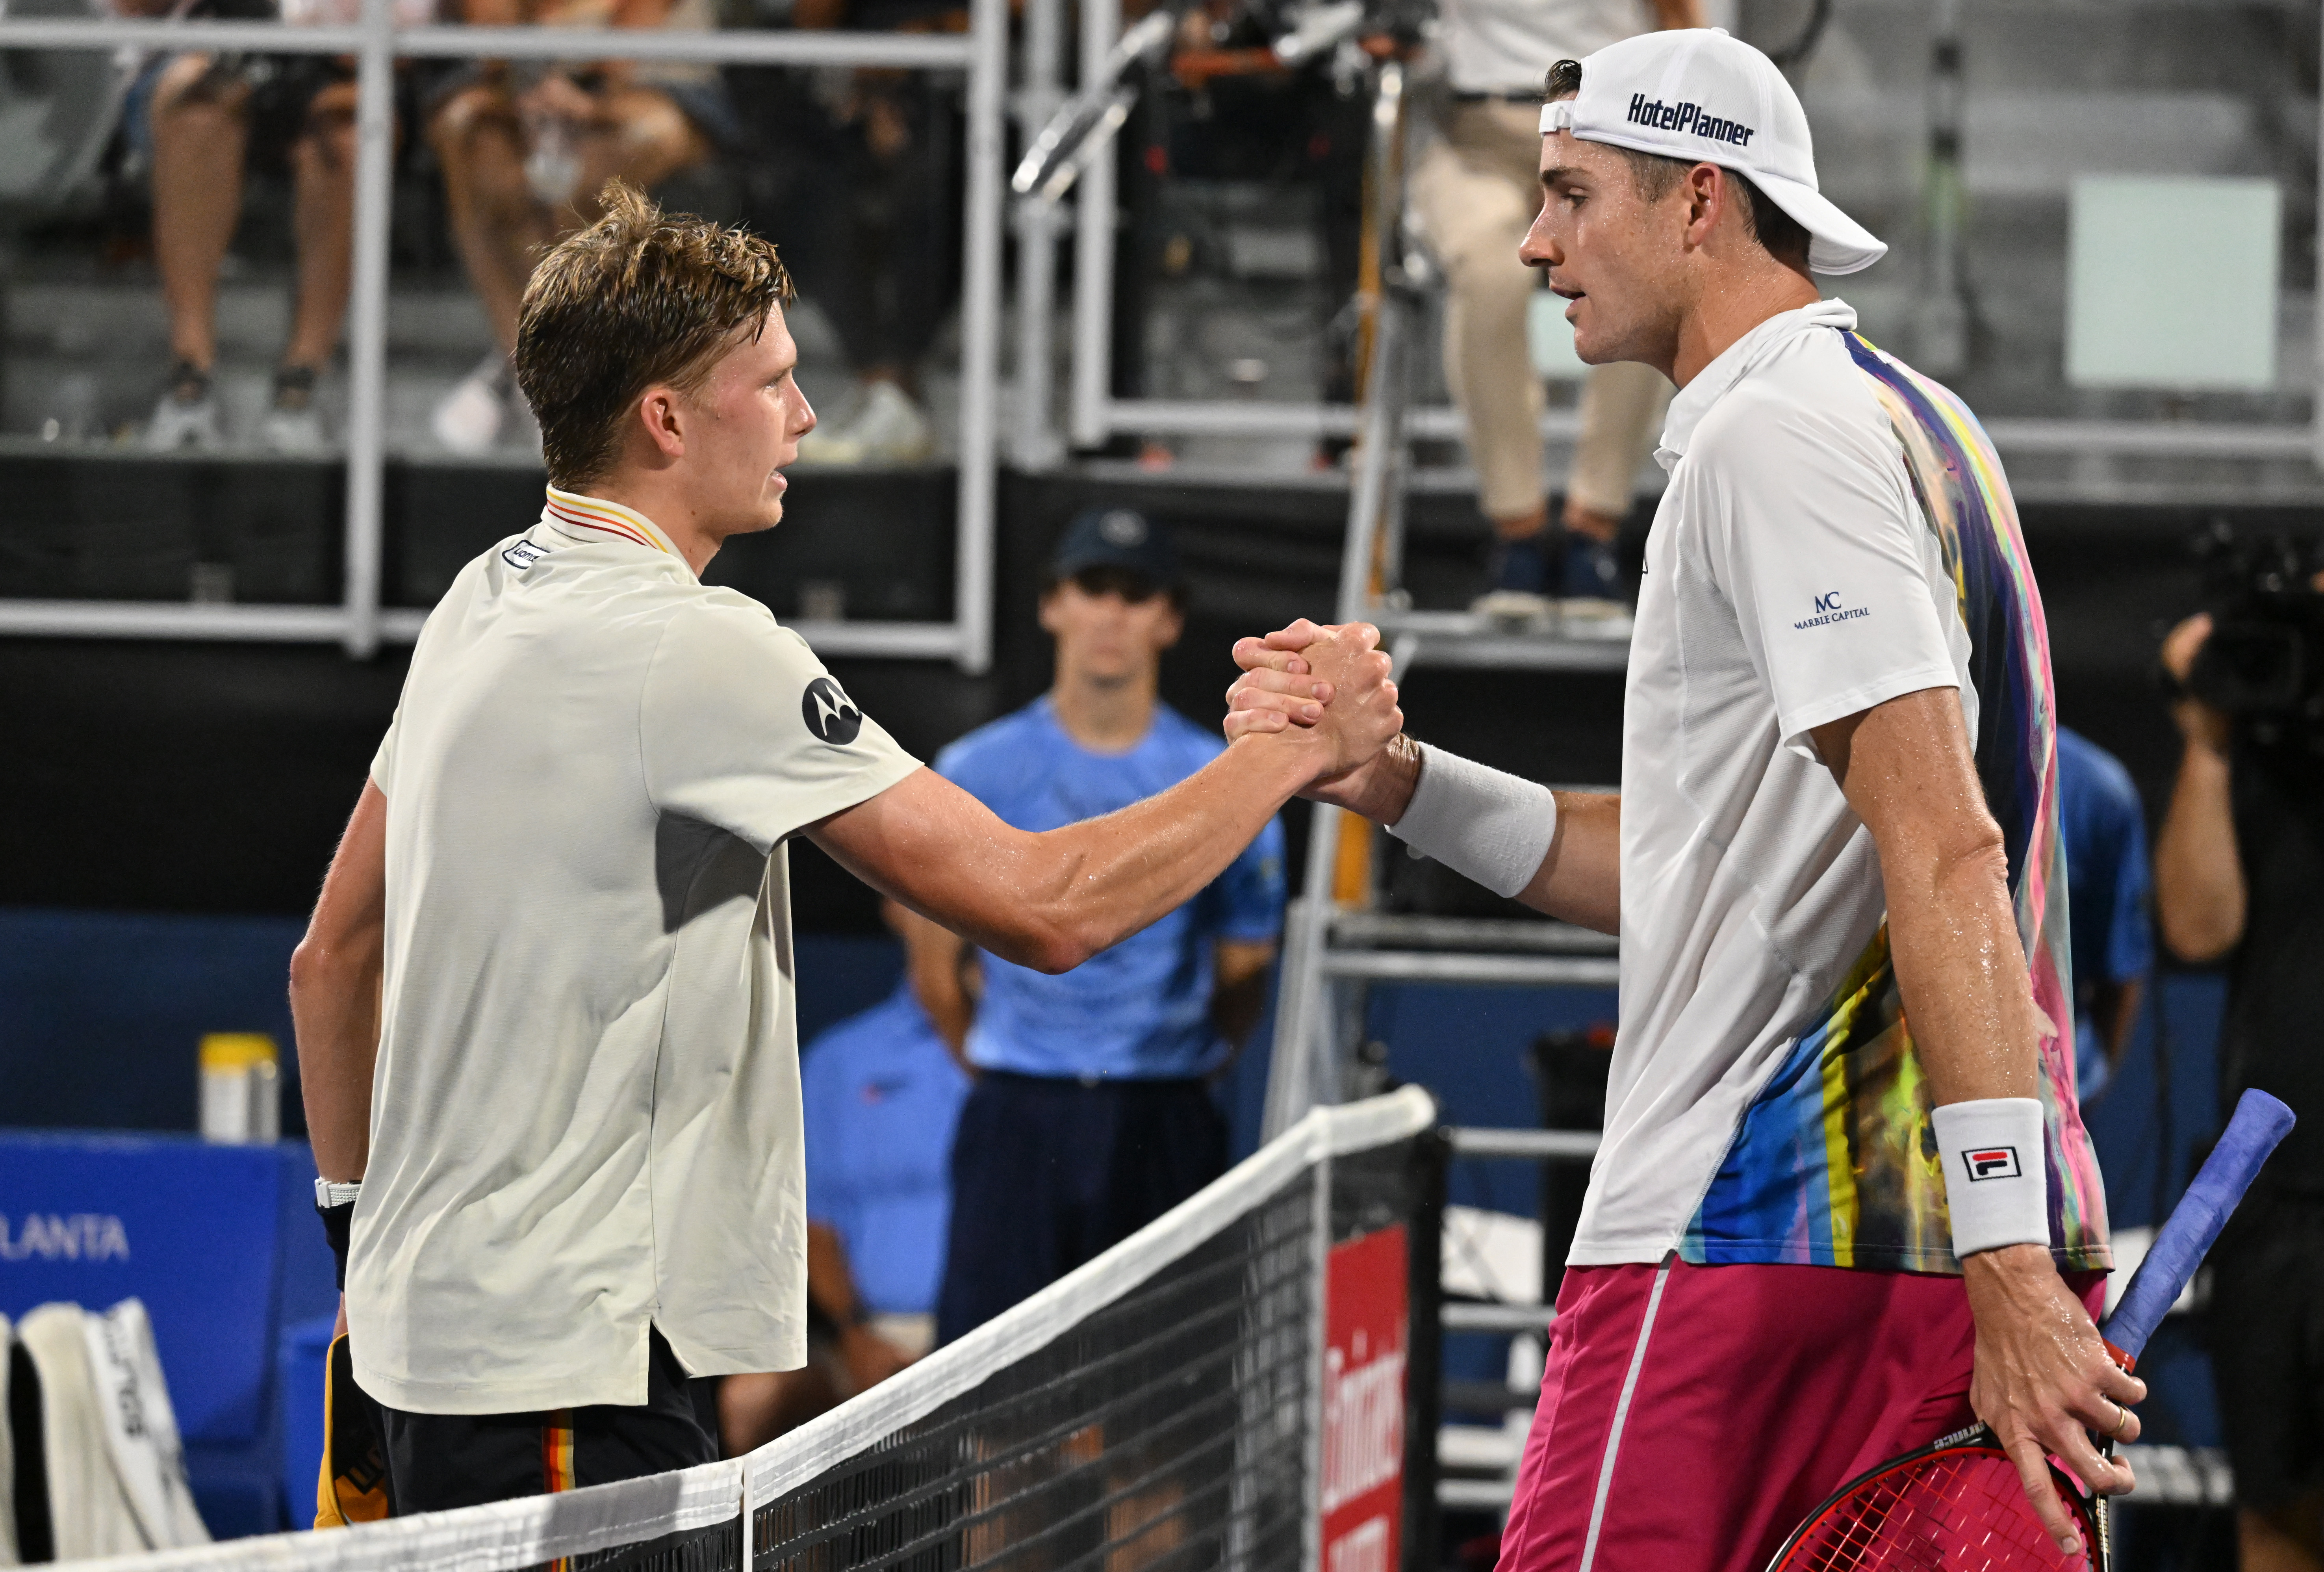 Jenson Brooksby stuns John Isner in Atlanta Open quarterfinals